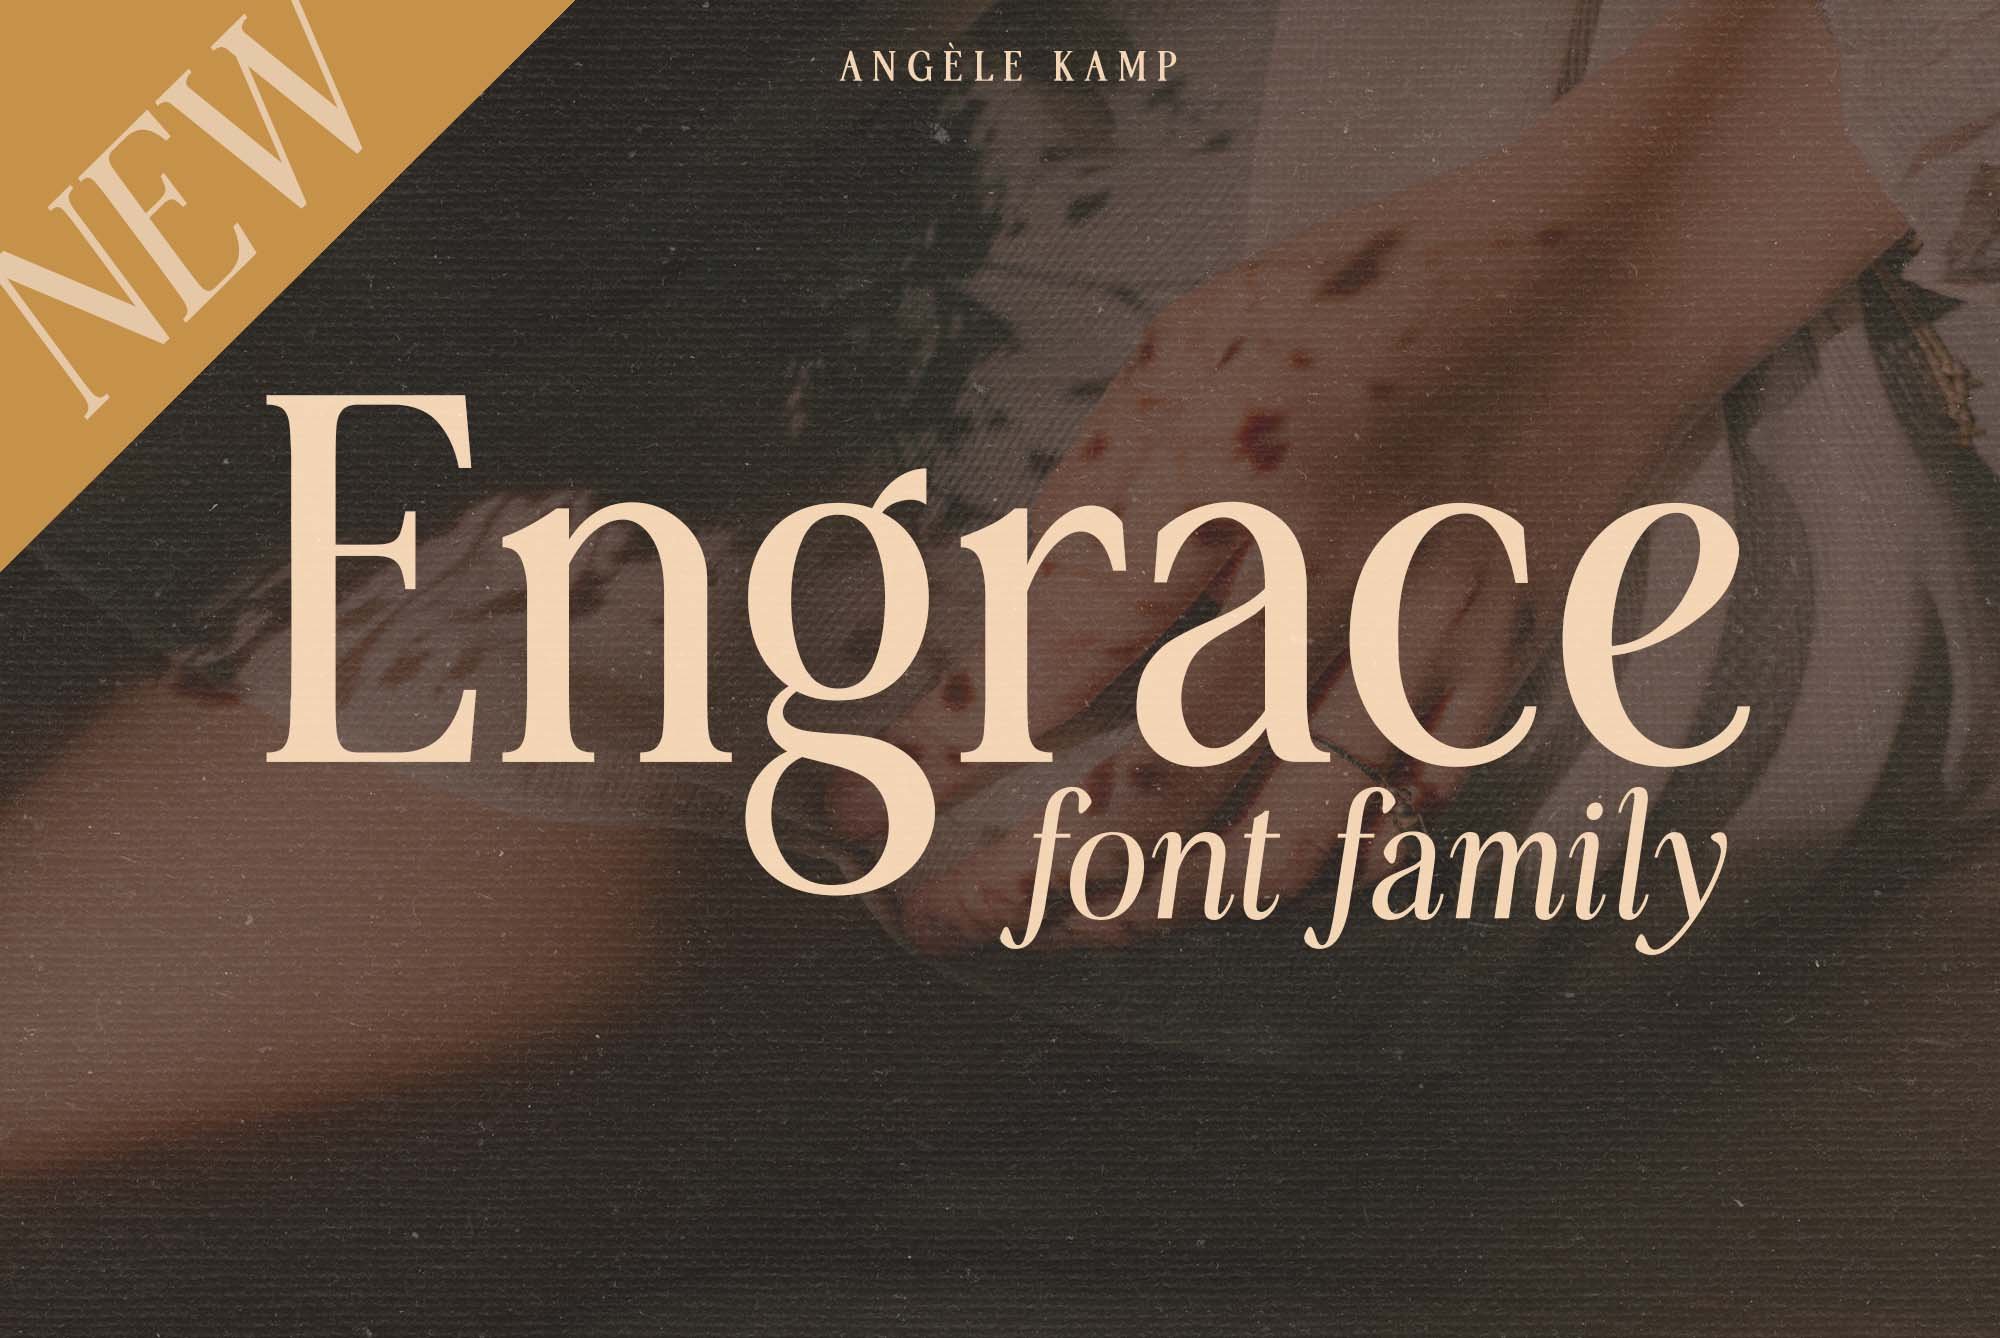 engrace serif font family angele kamp01 725